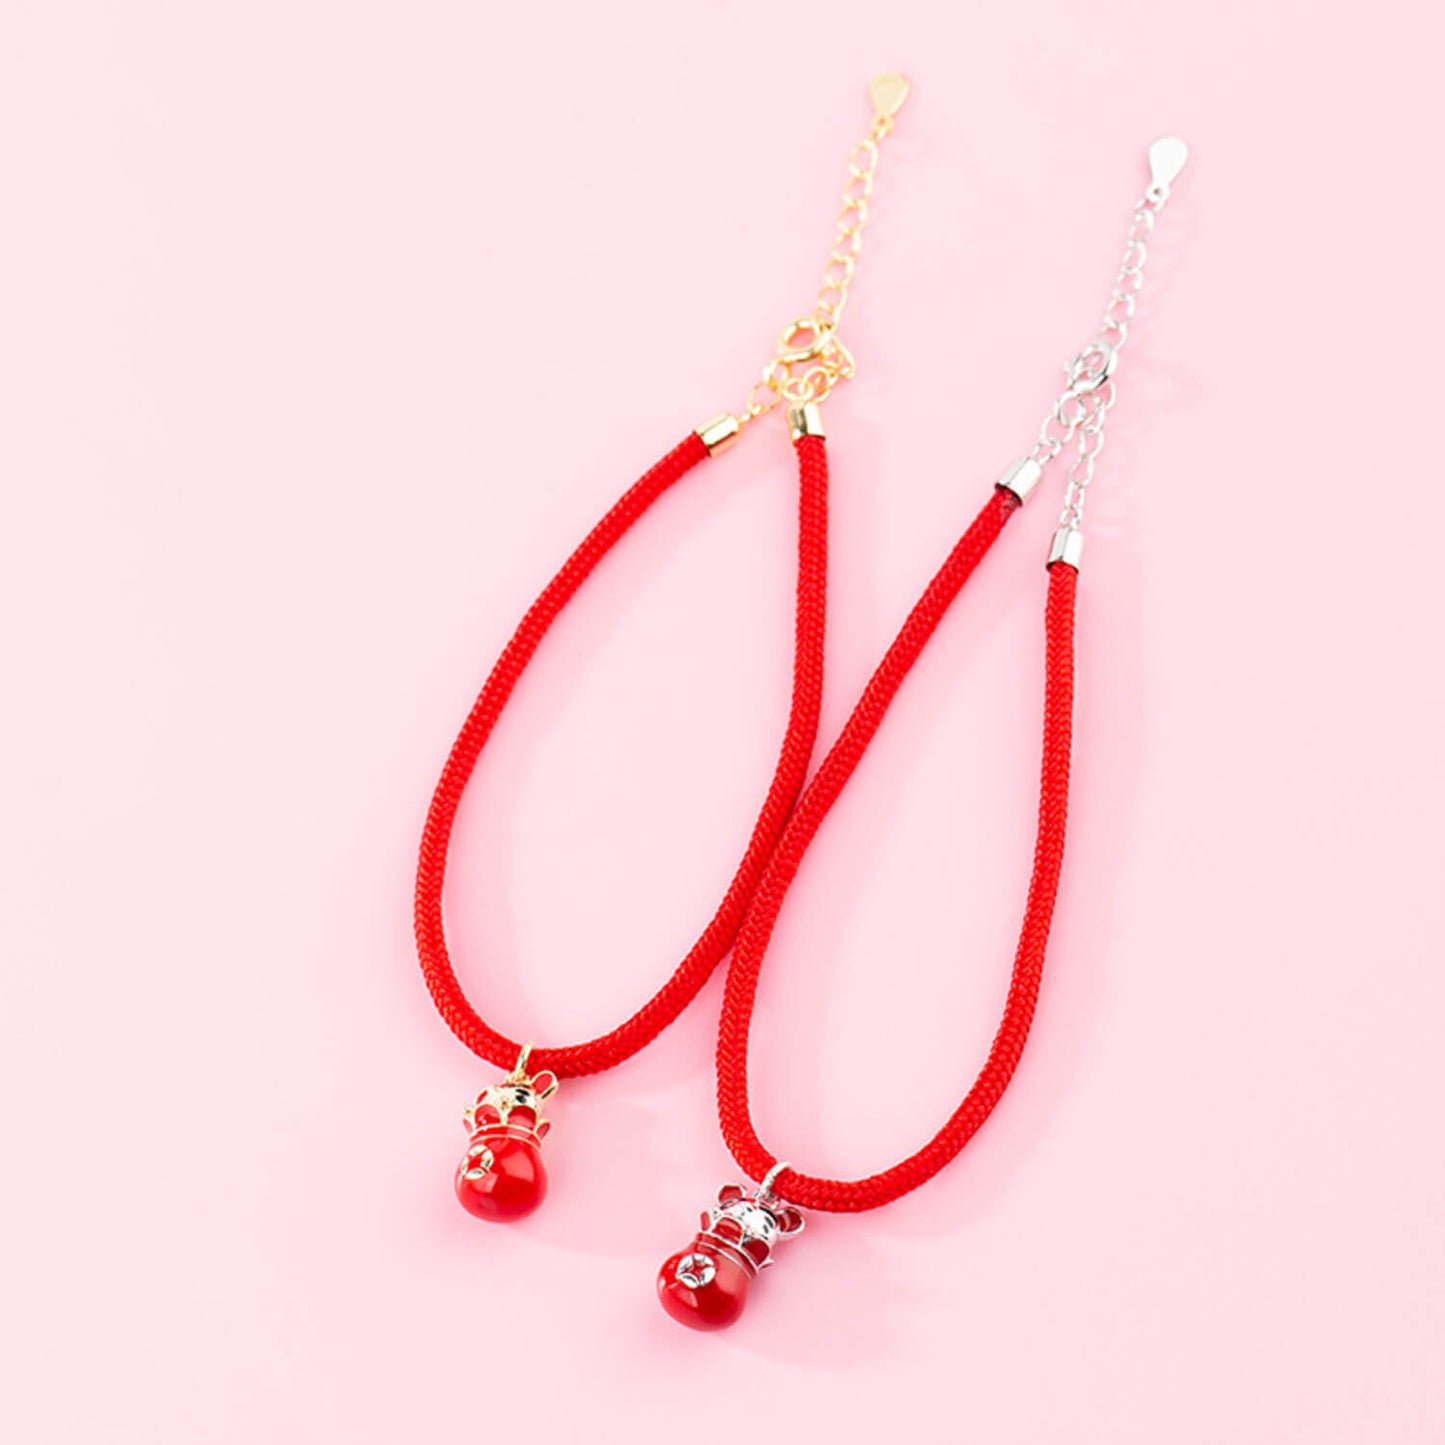 Jimmy Sterling Silver Jewelry Red String Lucky Cat Bracelet for women